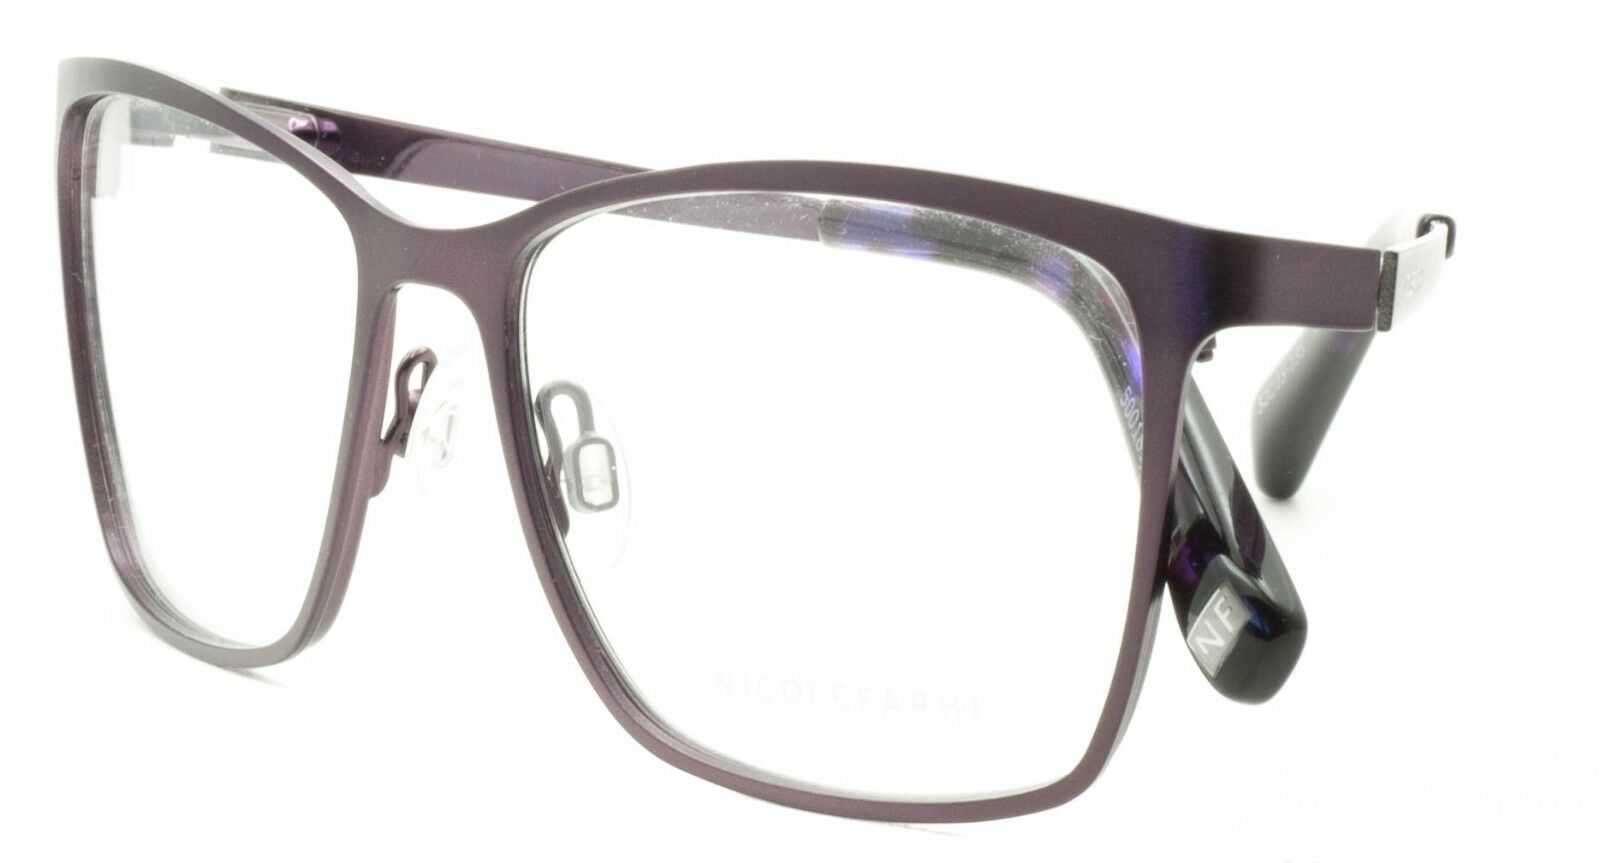 Nicole Farhi 06 30565531 52mm Eyewear Glasses RX Optical Eyeglasses FRAMES - New